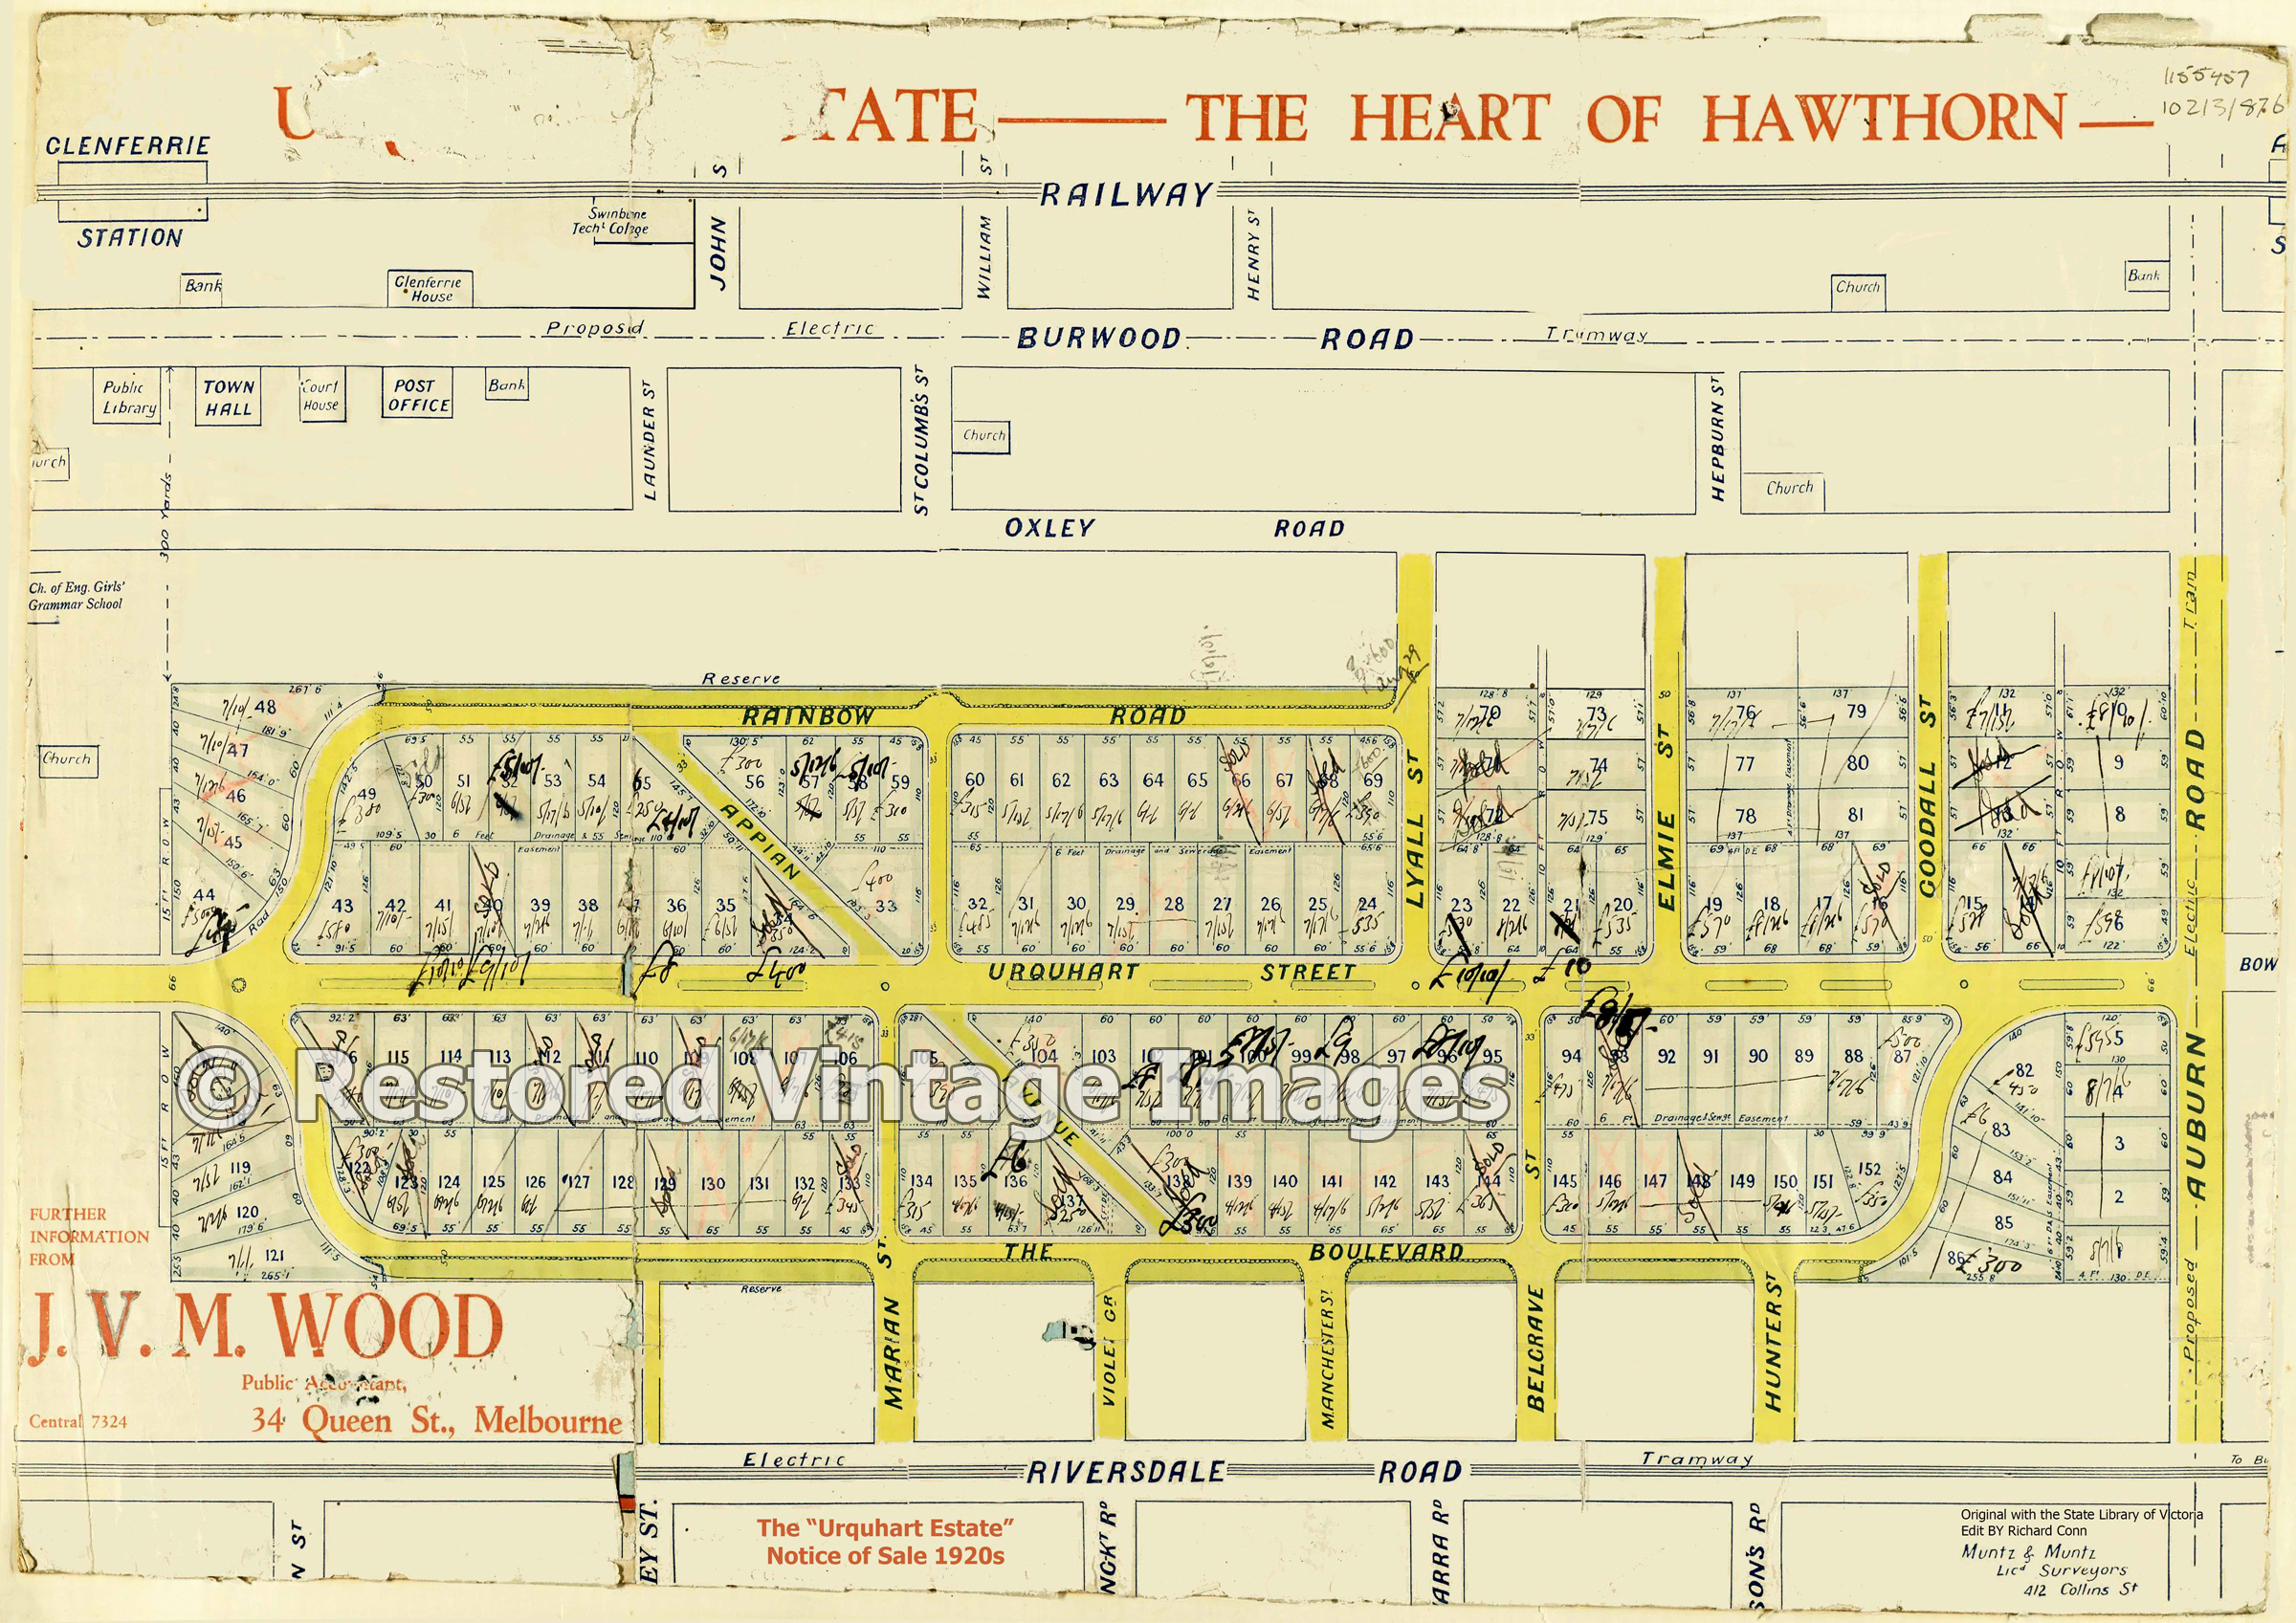 Urquhart Estate – The Heart Of Hawthorn 1920s